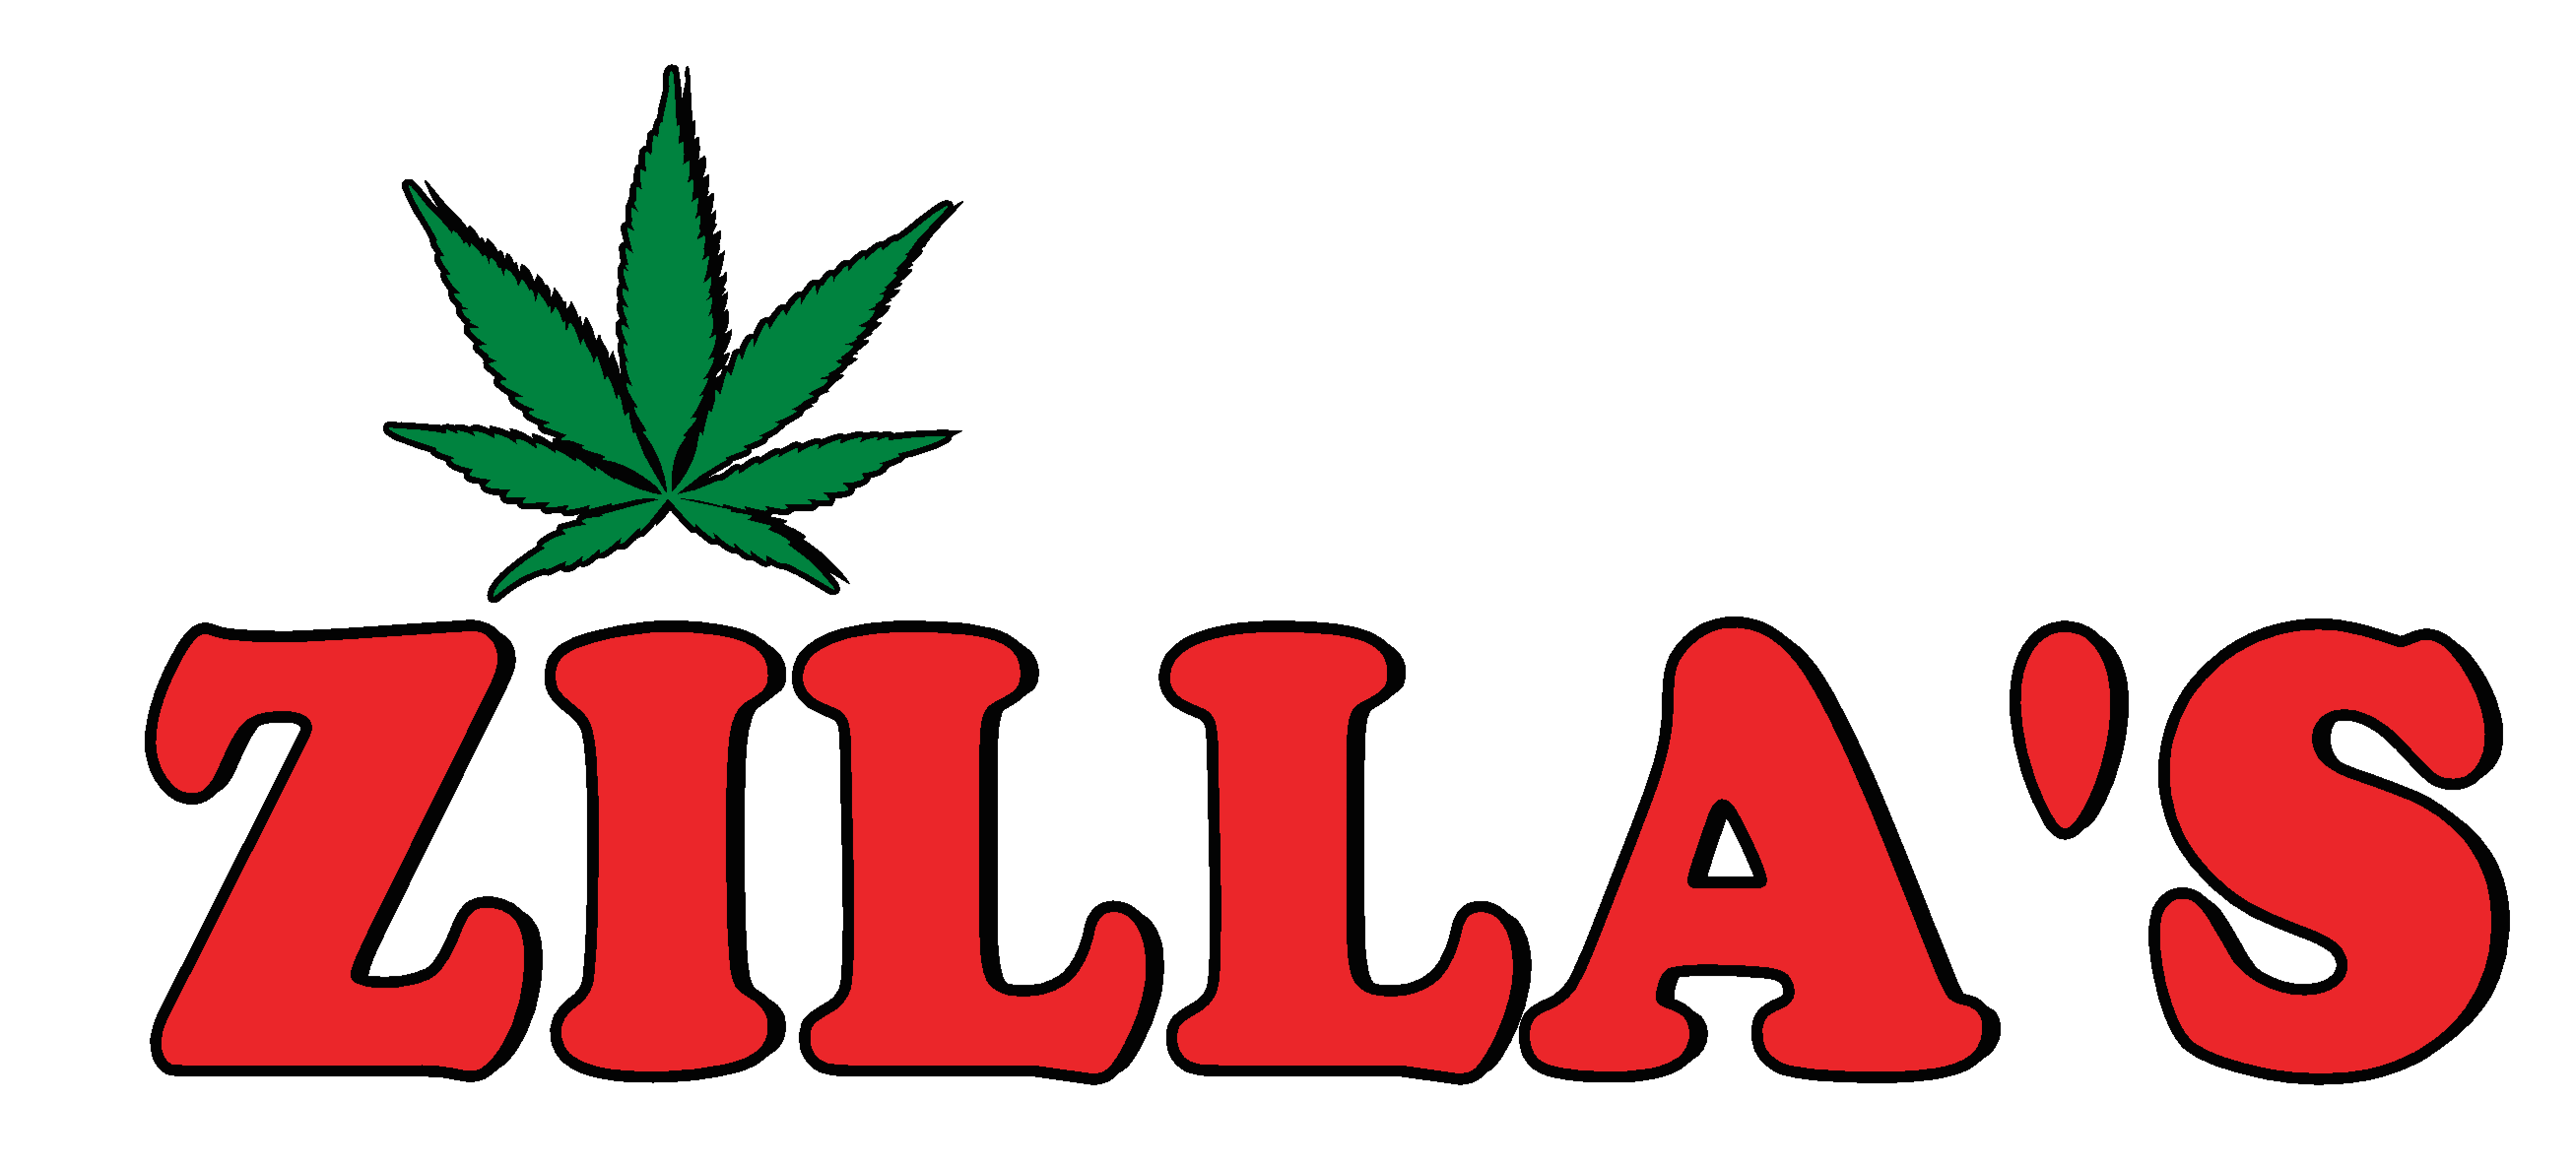 Zilla's Cannabis Brand Logo